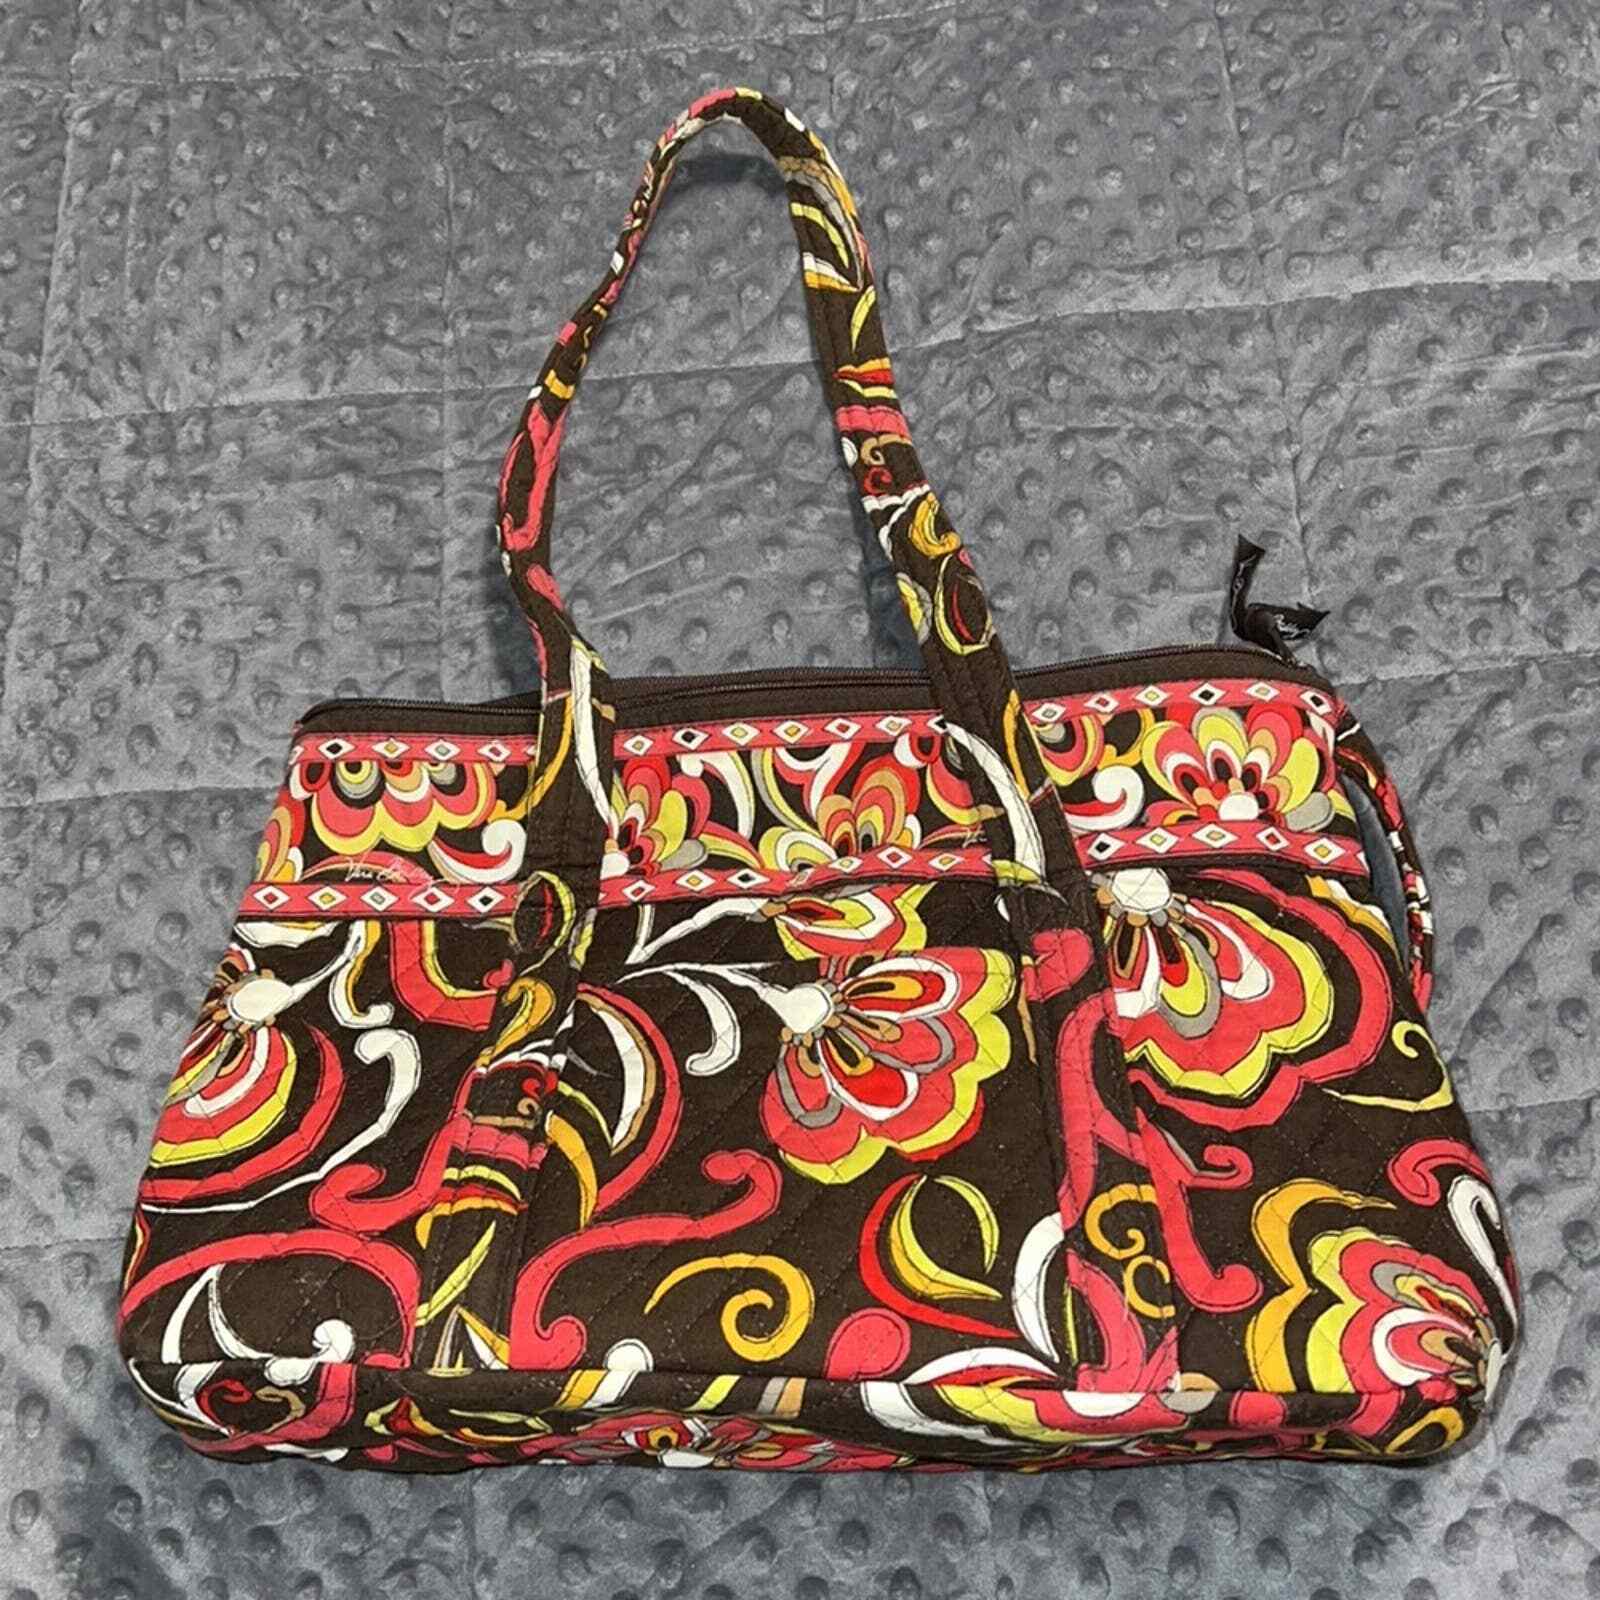 Melodramatic stretch Moss Vera Bradley retired Puccini pattern handbag shoulder bag tote | eBay